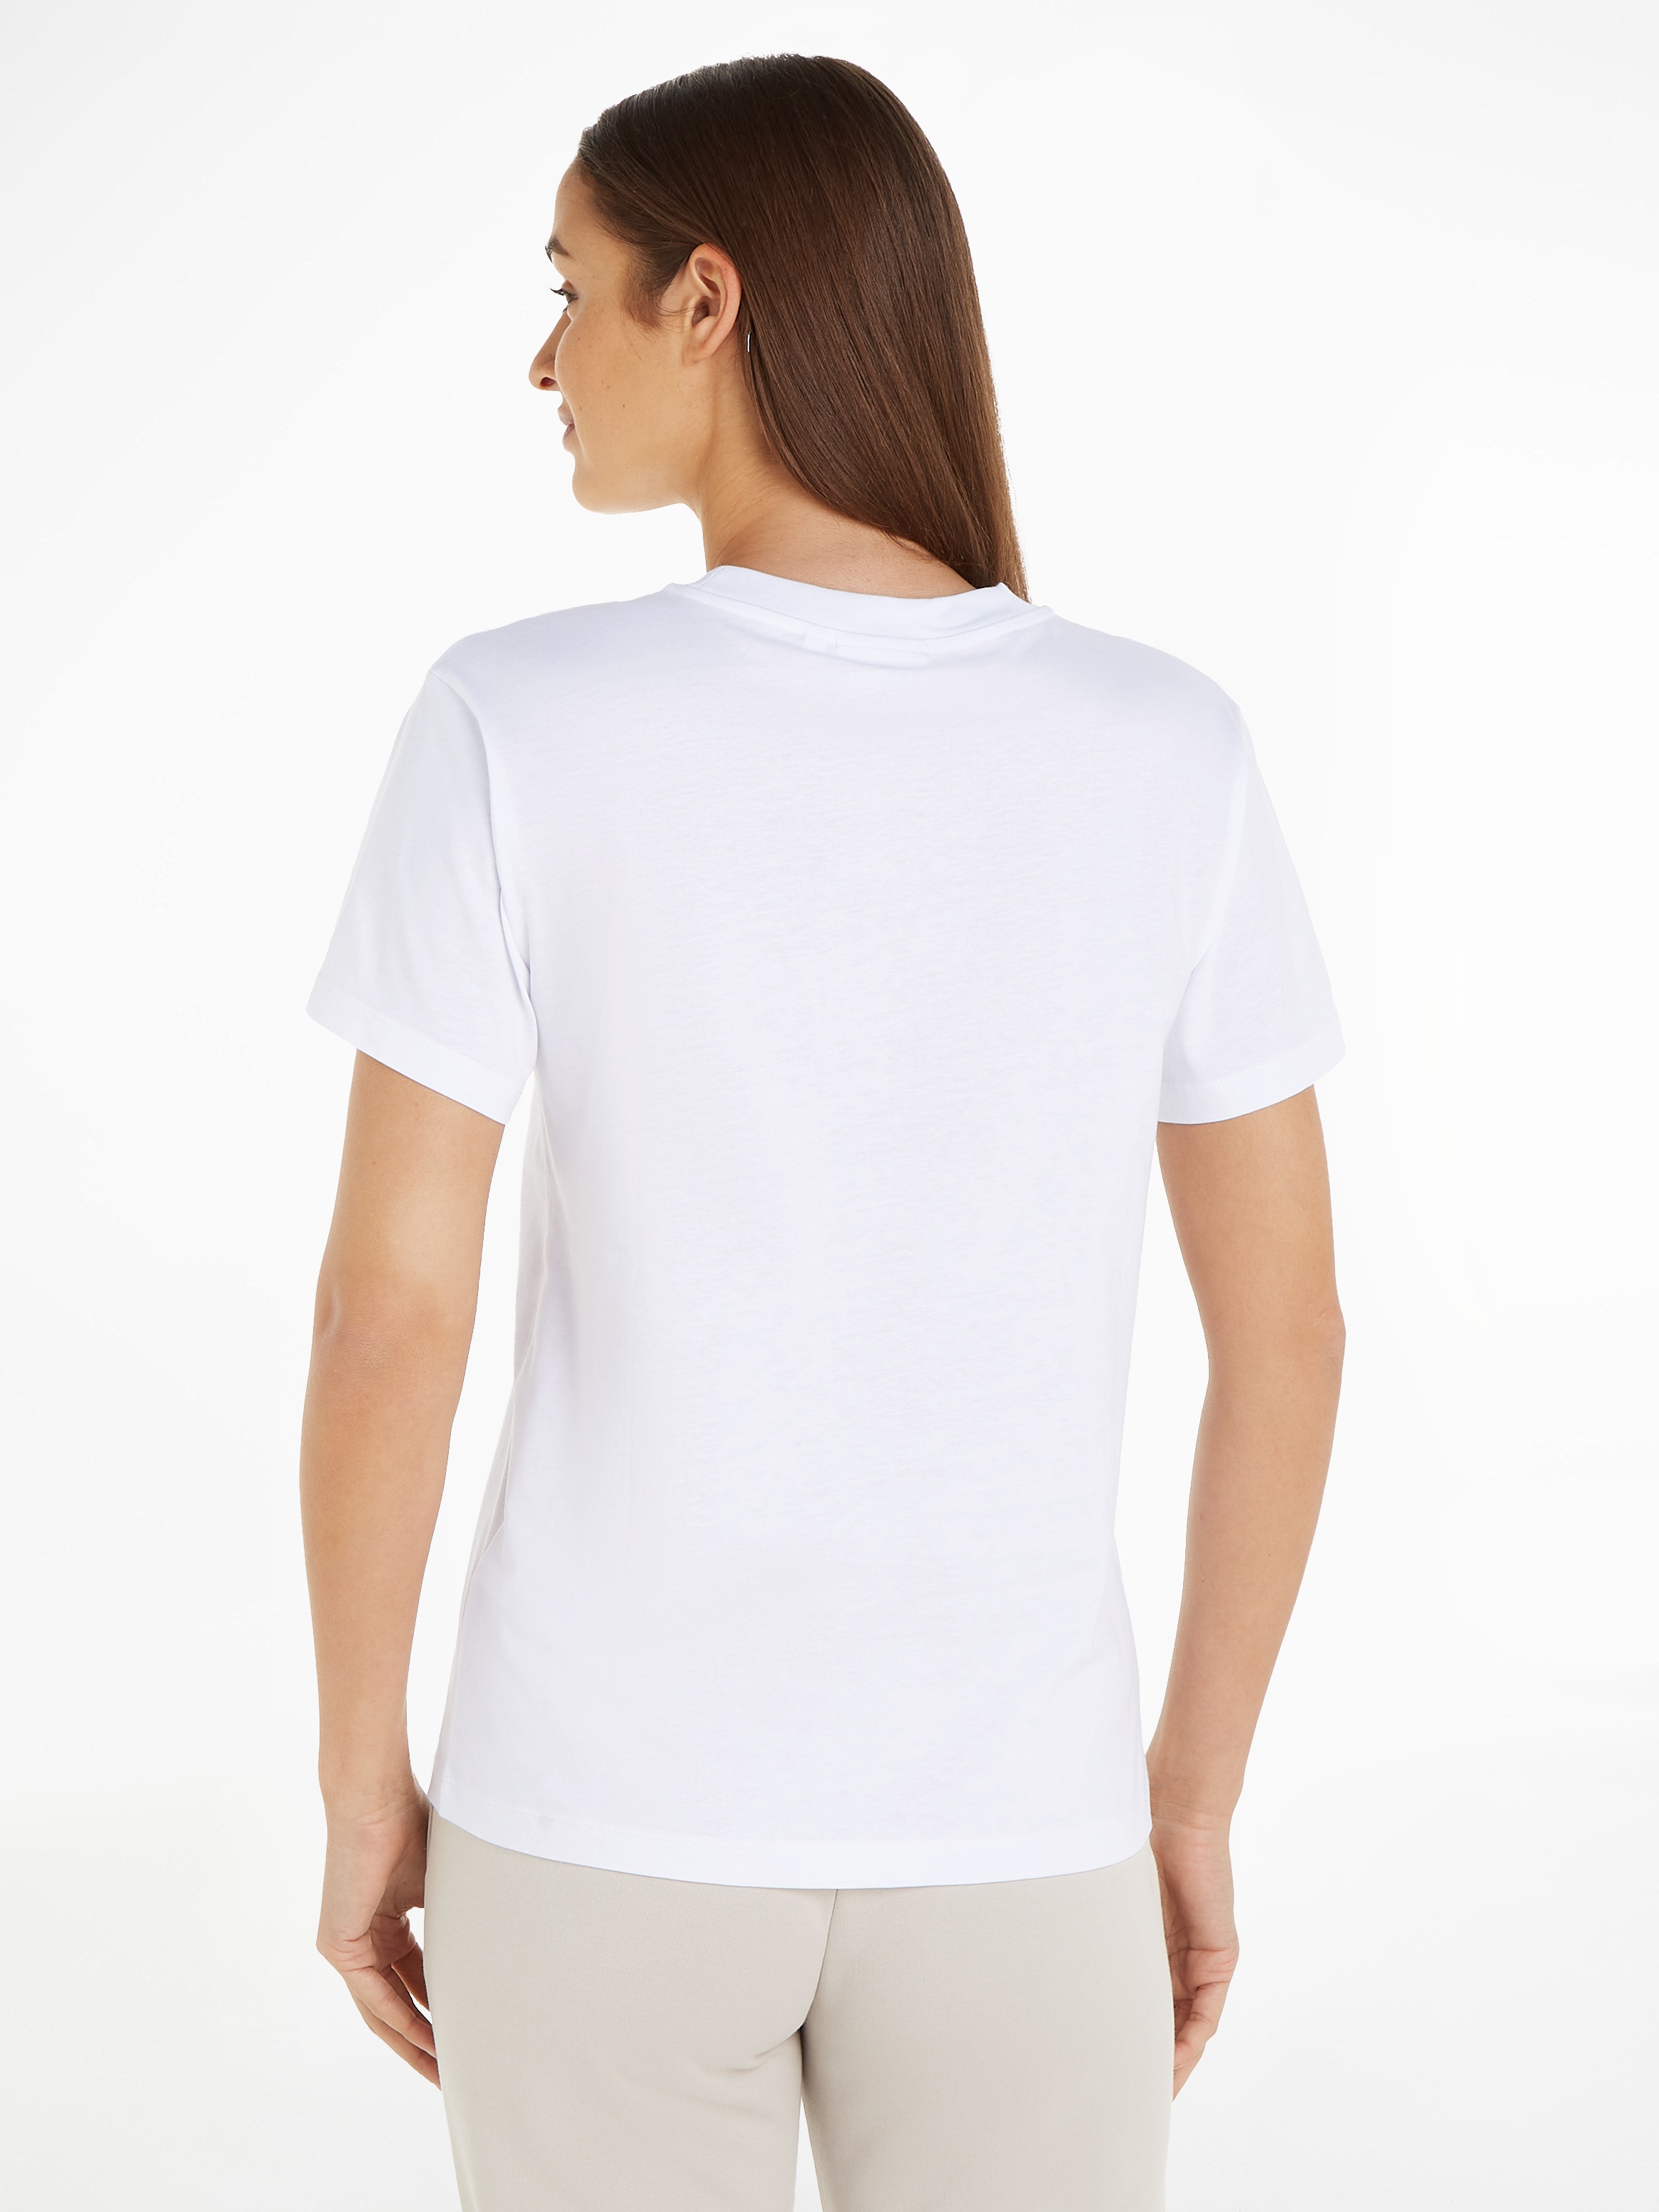 LOGO REGULAR« Klein HERO T-Shirt I\'m shoppen | walking »Shirt Calvin